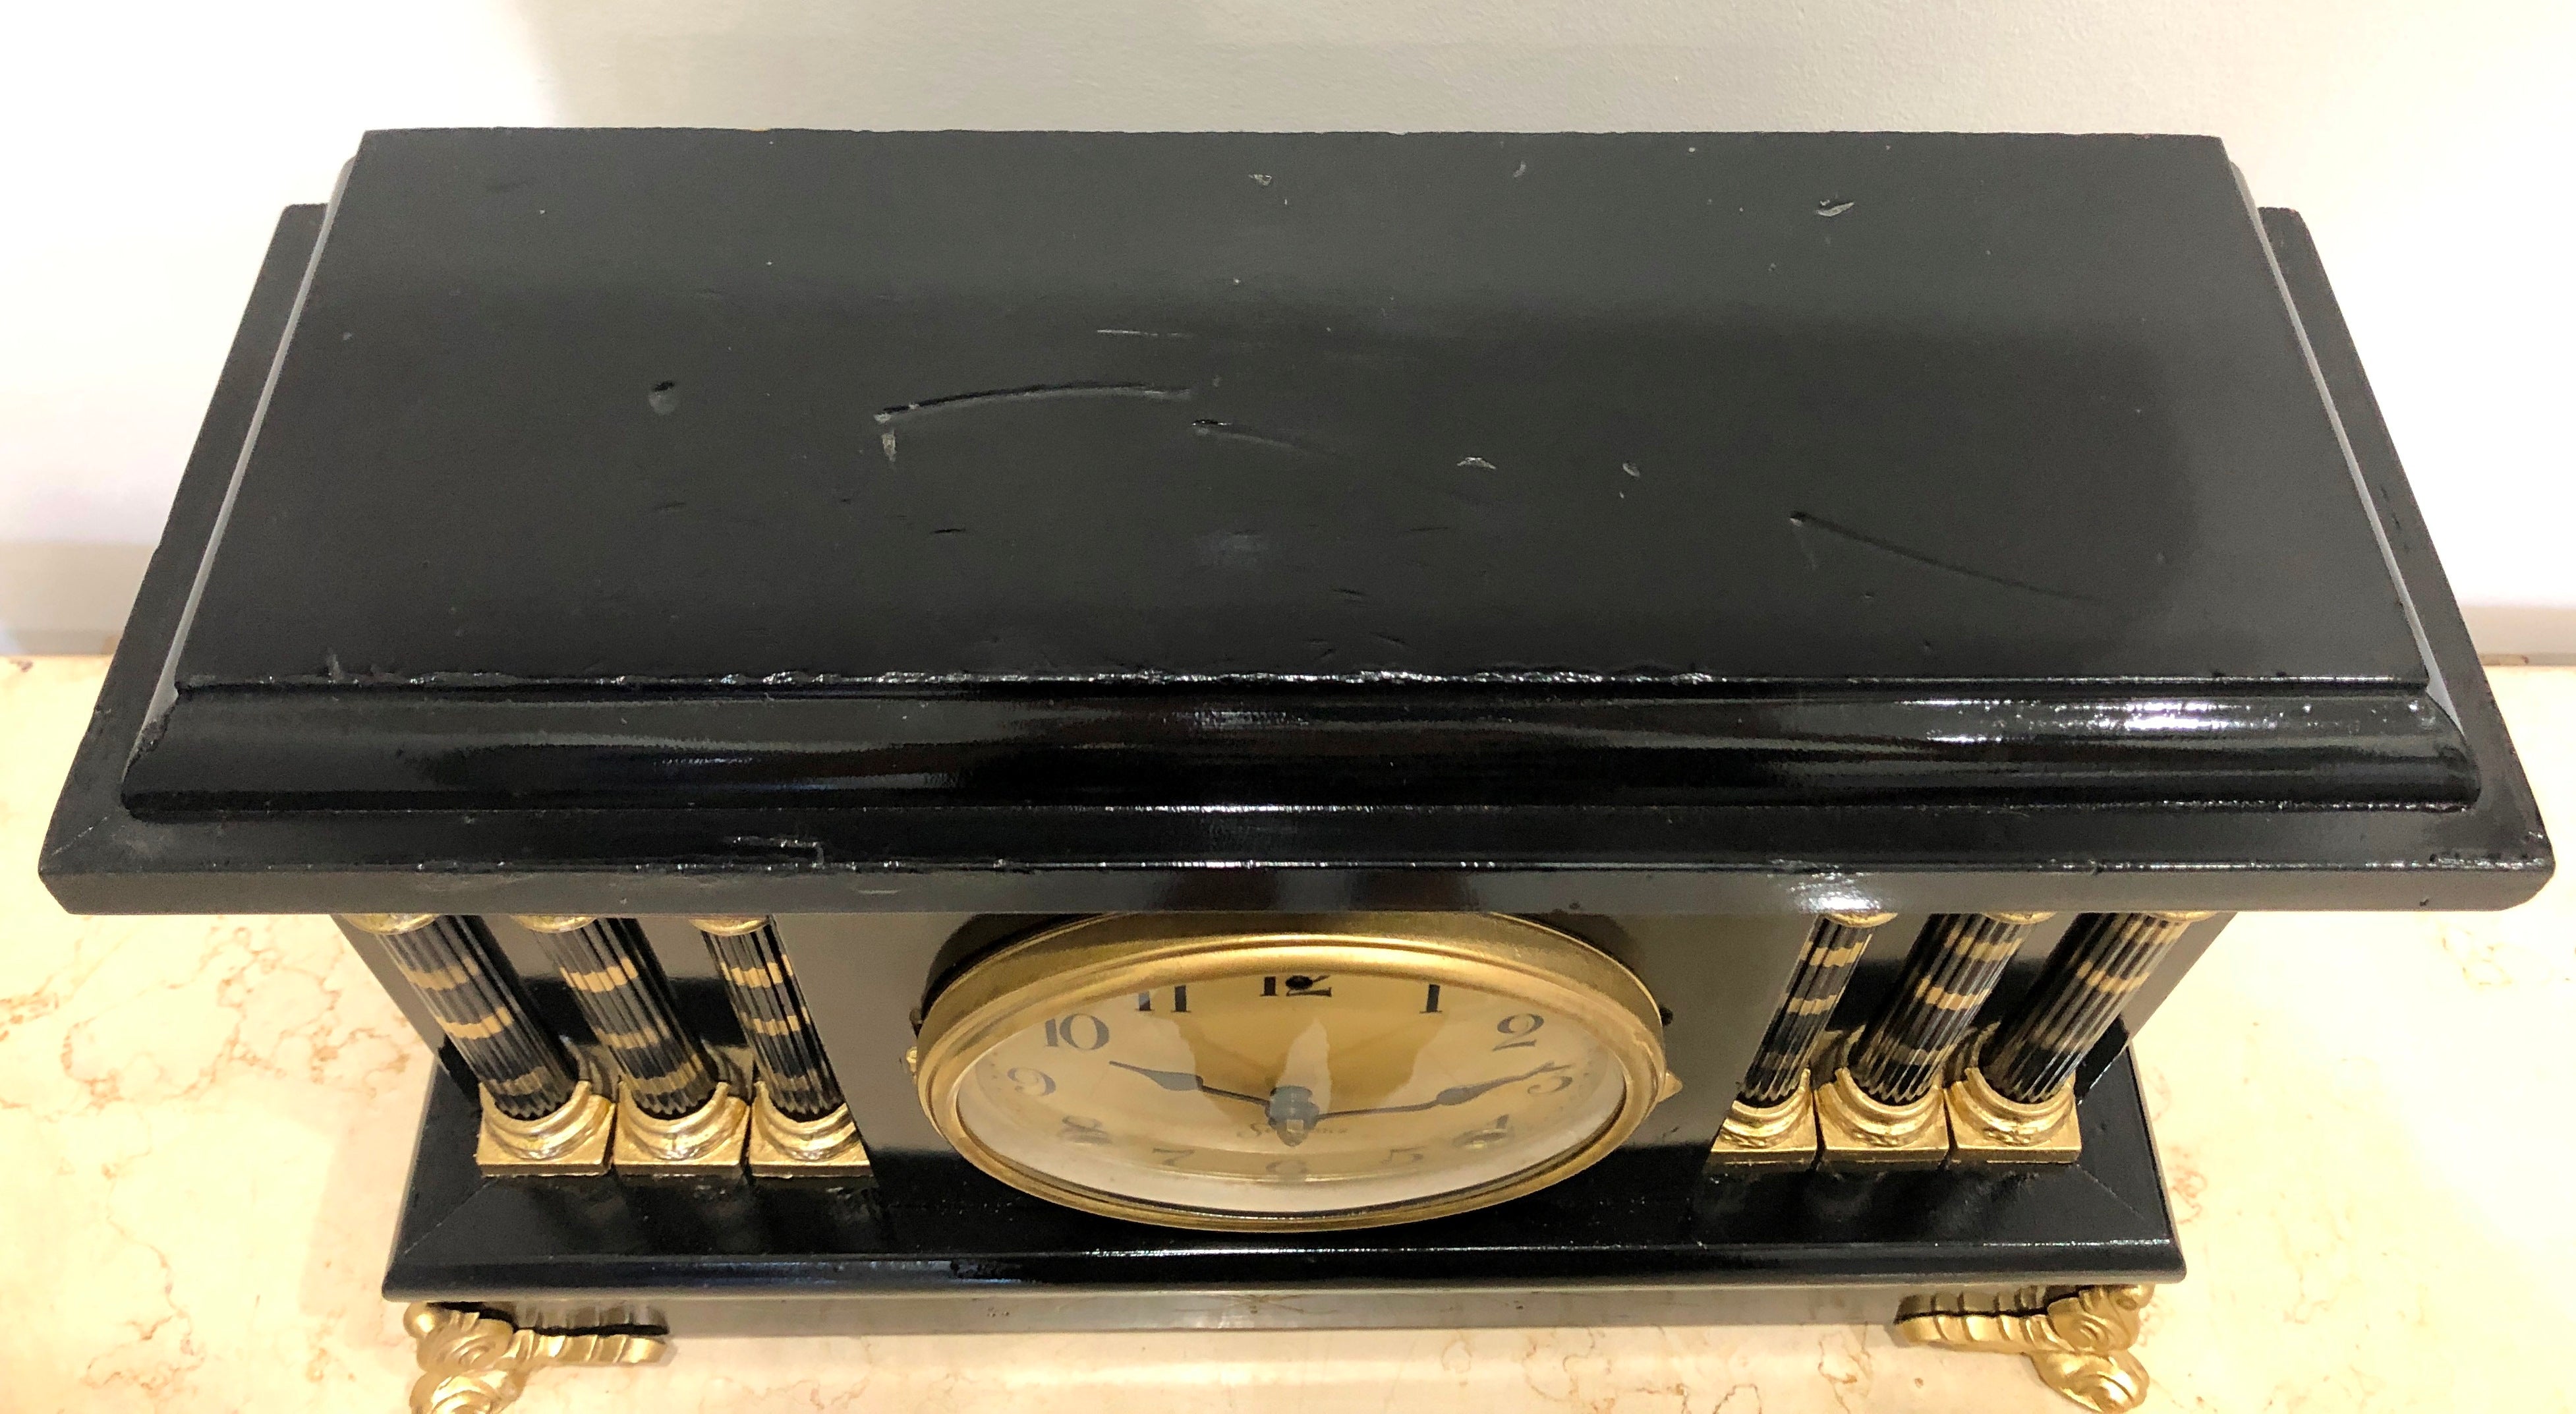 Original Antique Sessions USA Mantel Clock | eXibit collection